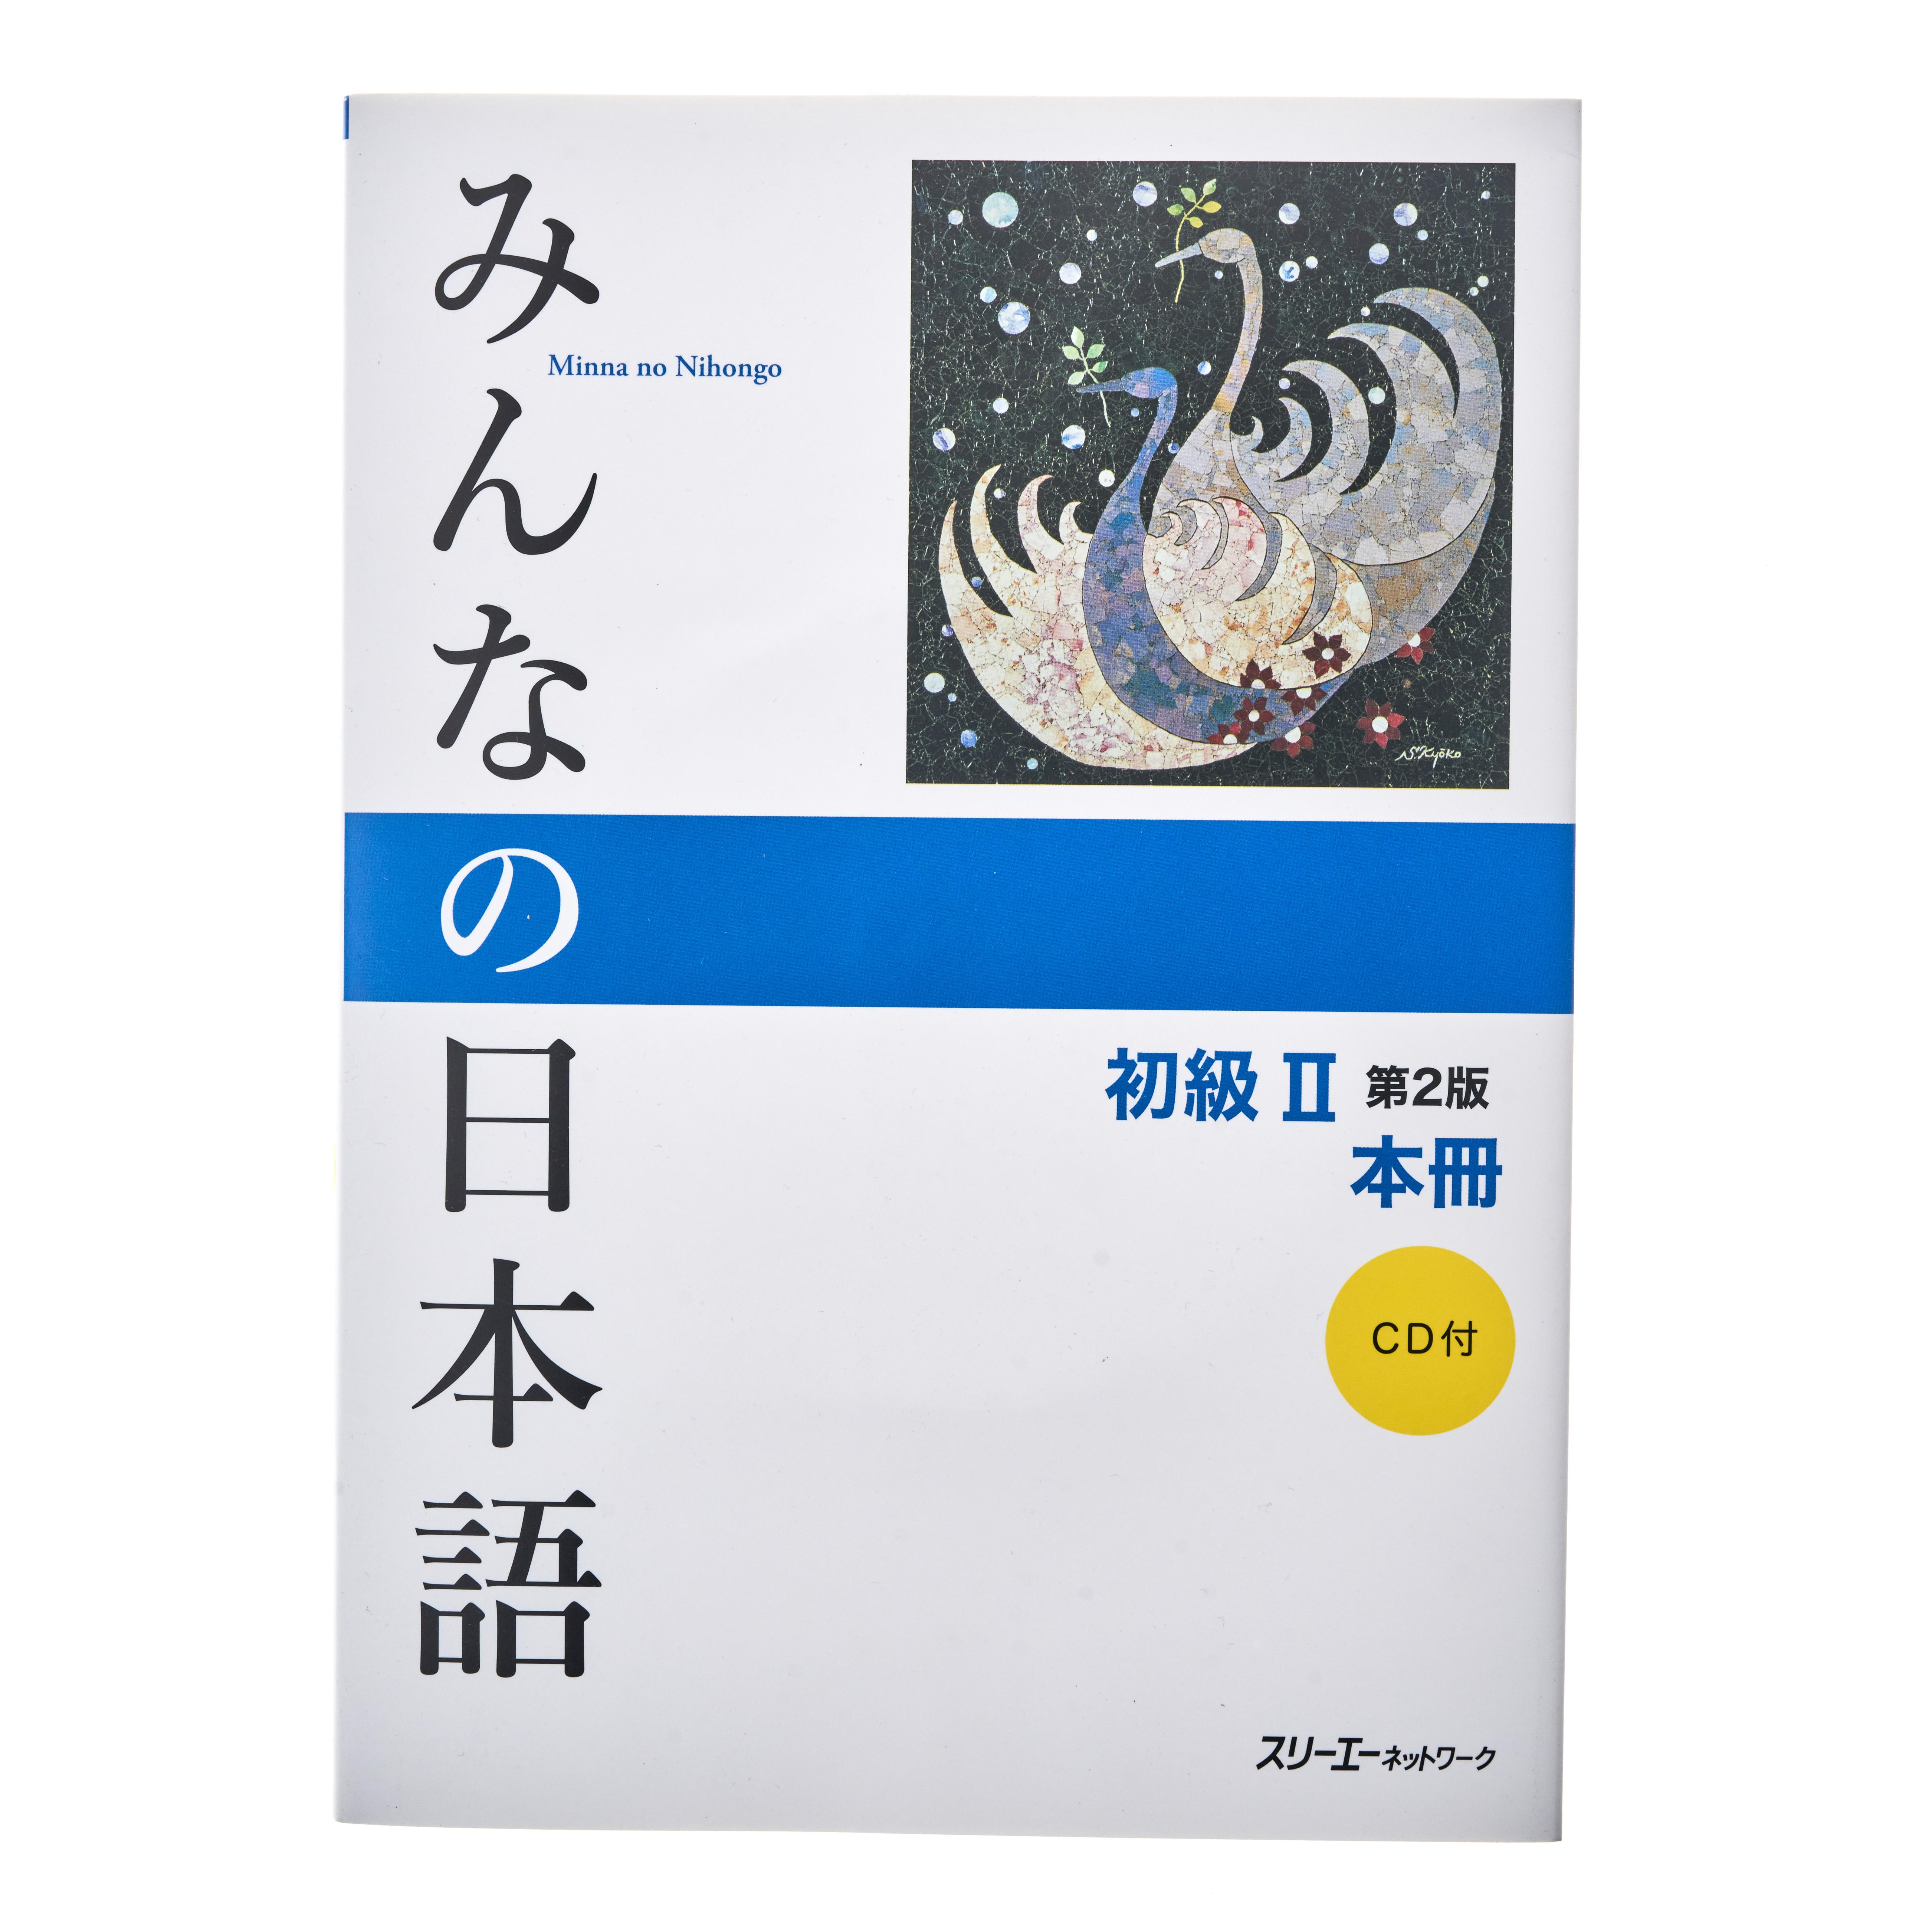 Minna no Nihongo I 2nd Edition Main Textbook (Romanized Version) - 686 g -  ジャパンセンター